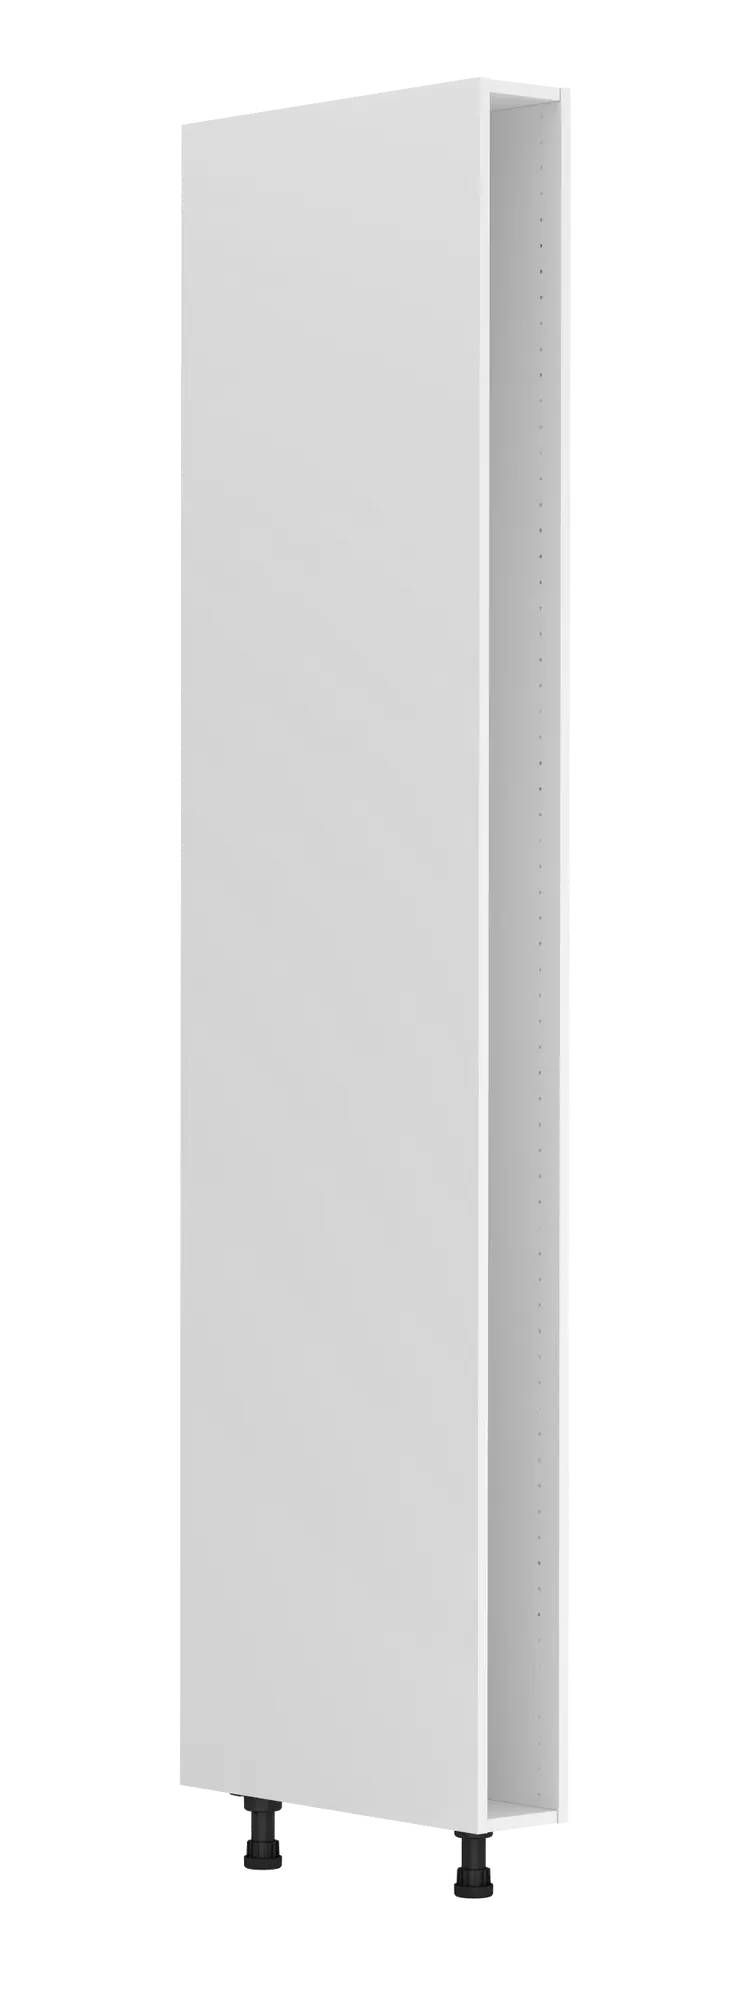 Mueble columna blanco delinia id 15x225 cm